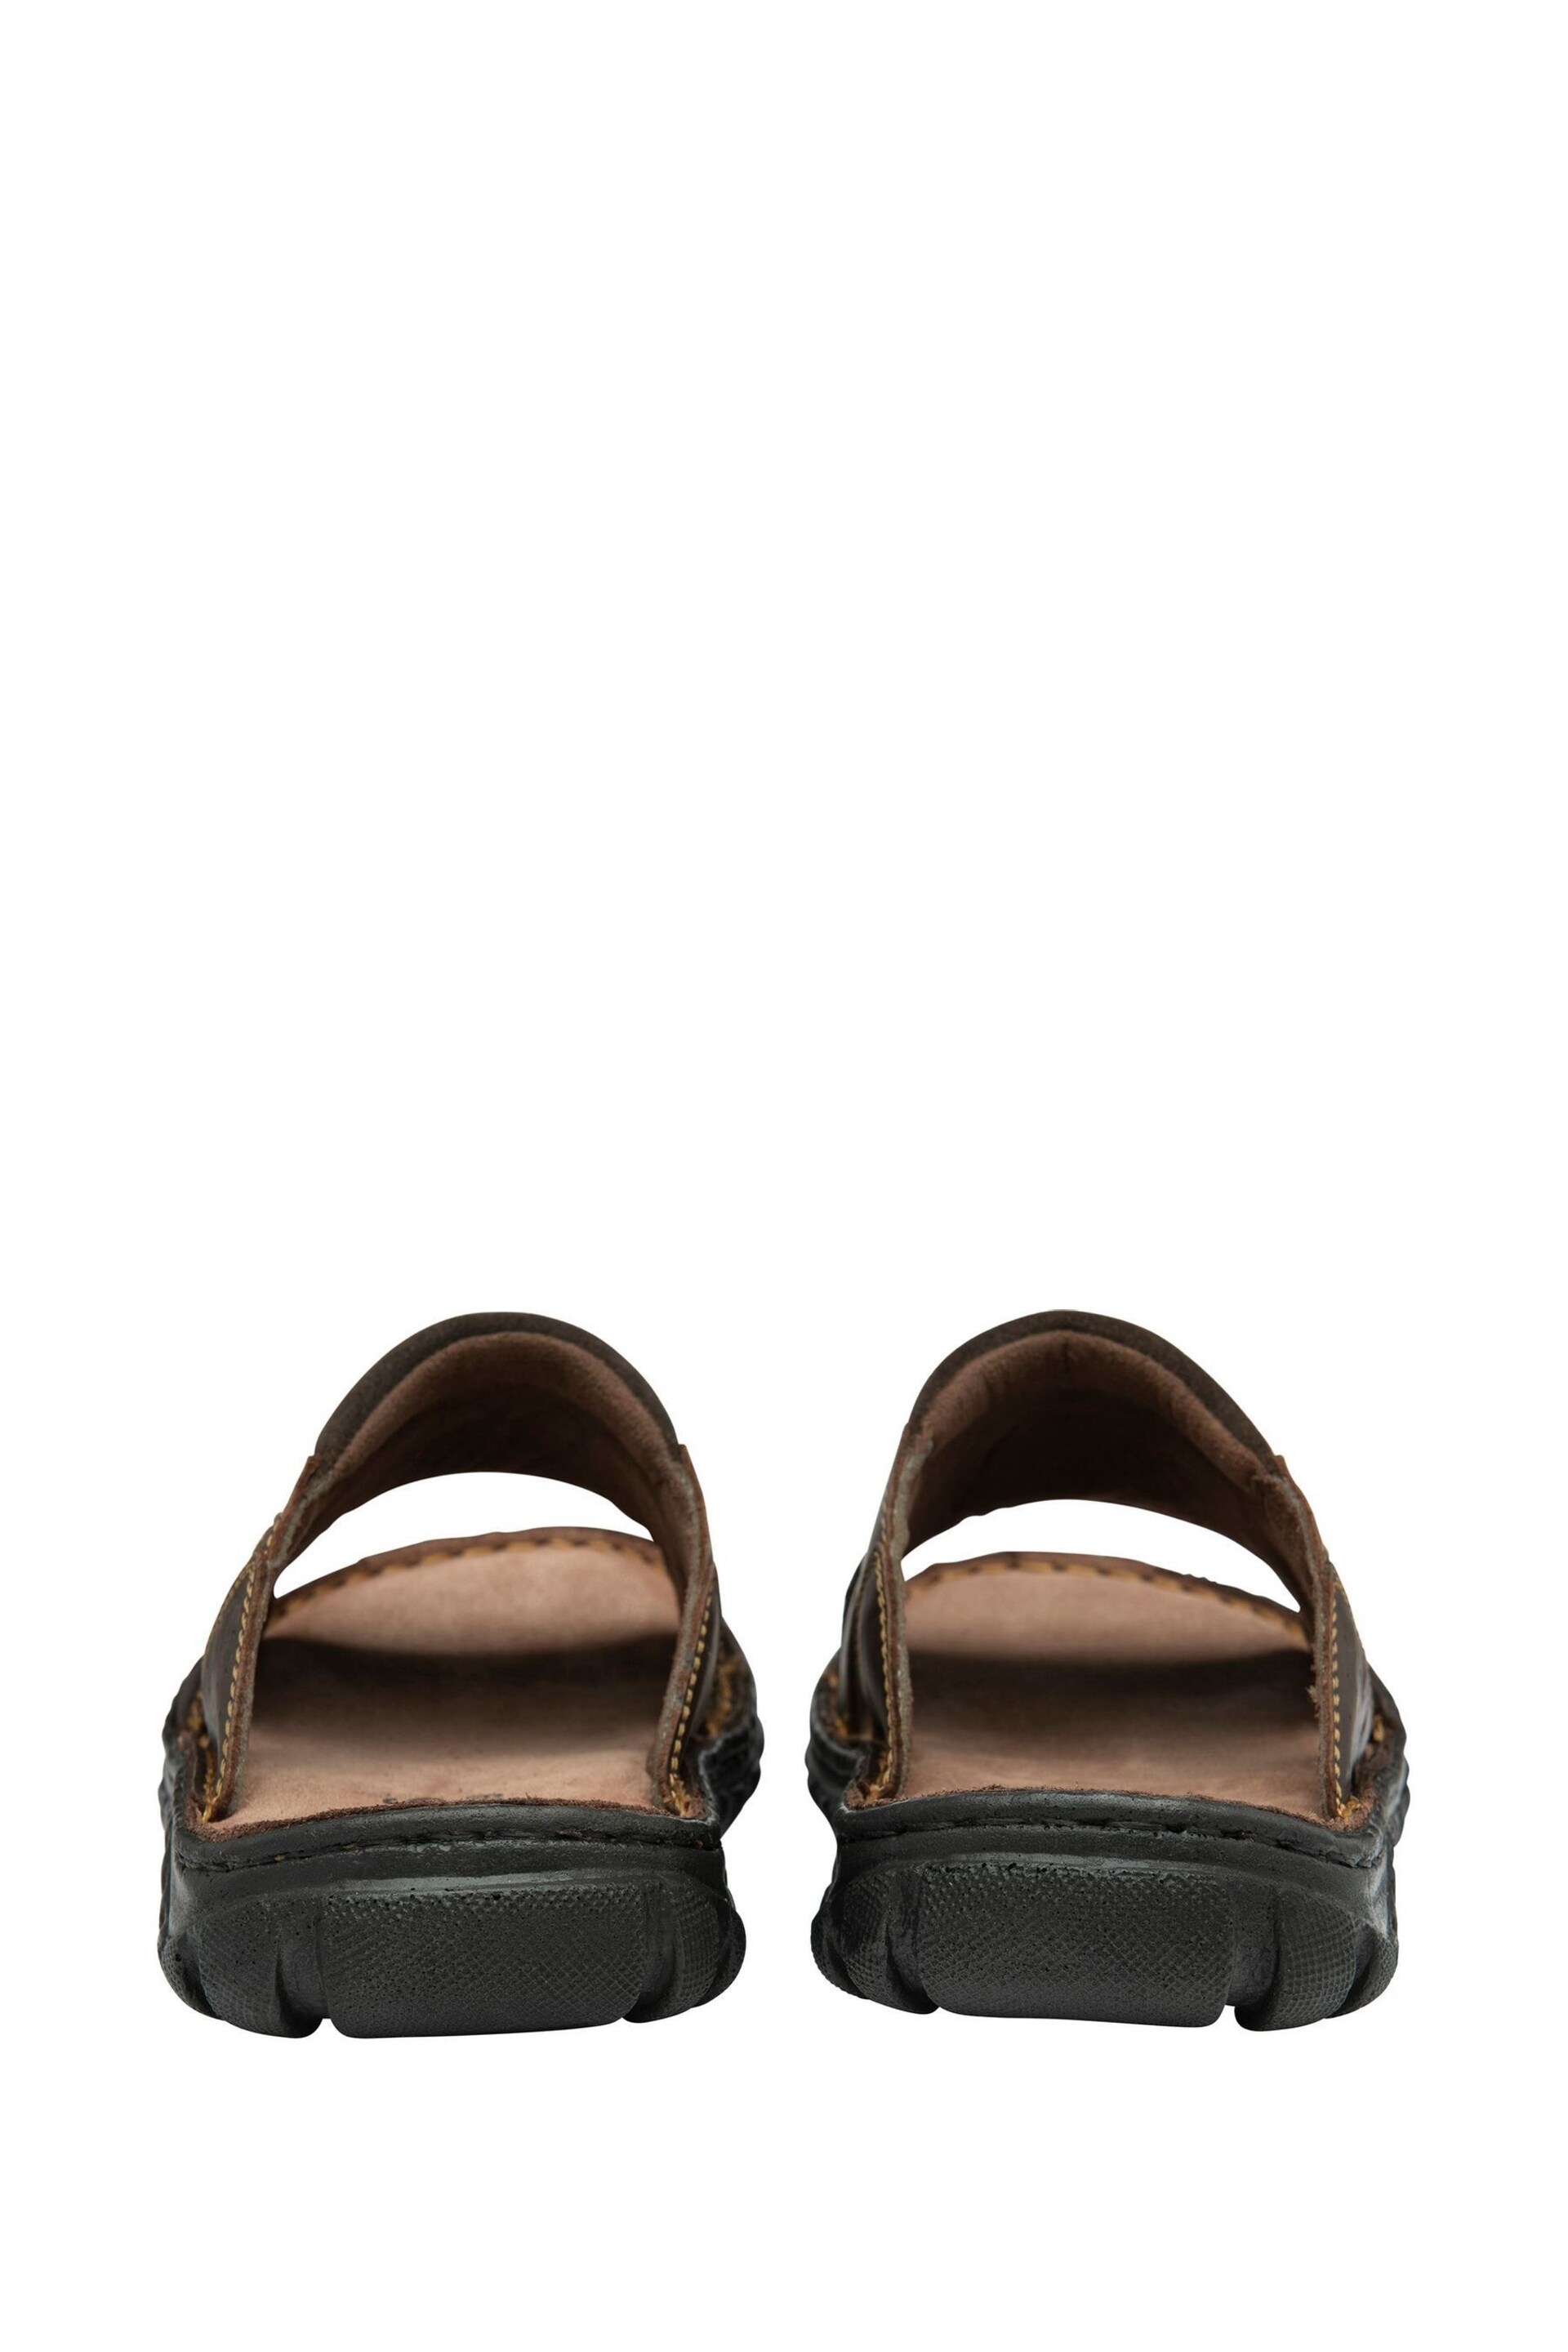 Lotus Brown Open-Toe Mule Sandals - Image 3 of 4